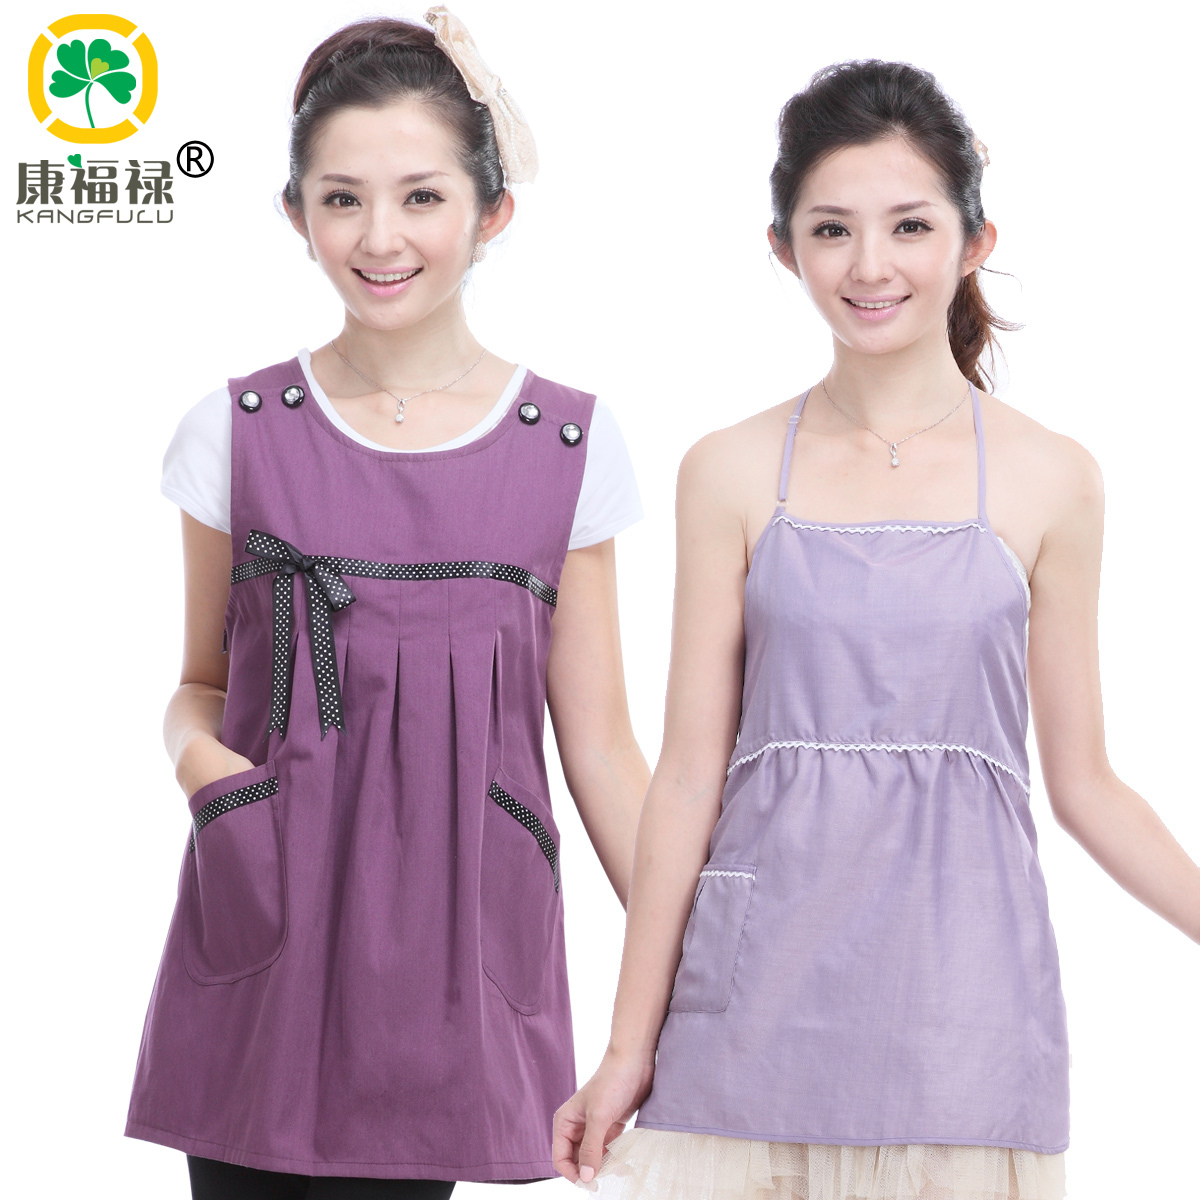 Double silver fiber apron radiation-resistant maternity clothing maternity radiation-resistant clothes 803y103